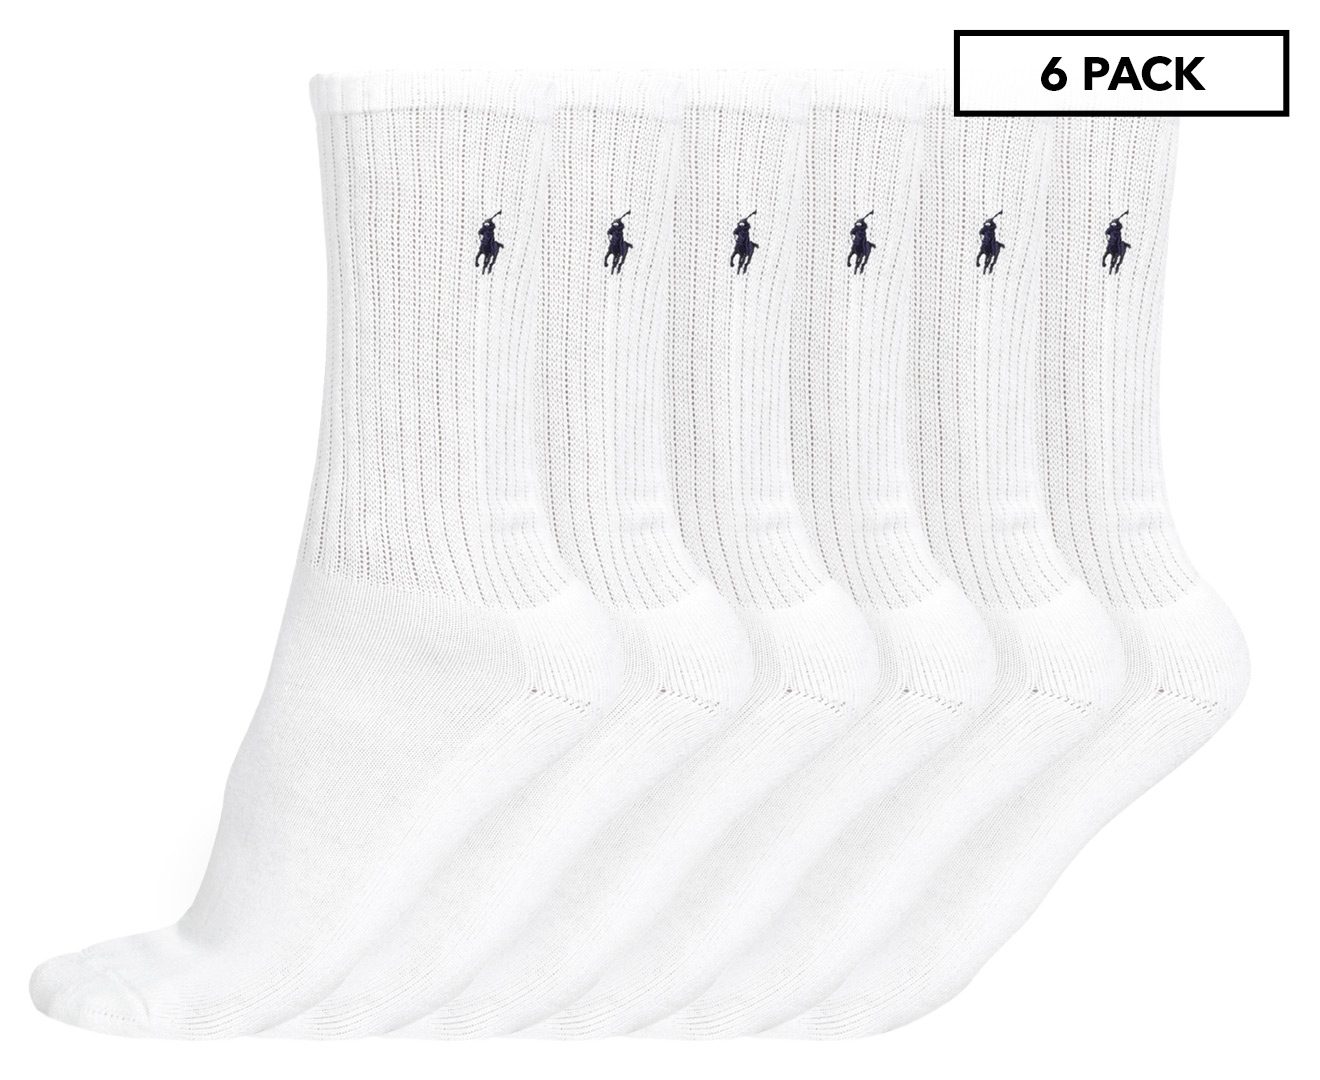 White sports socks x 3 pack size 10-13 